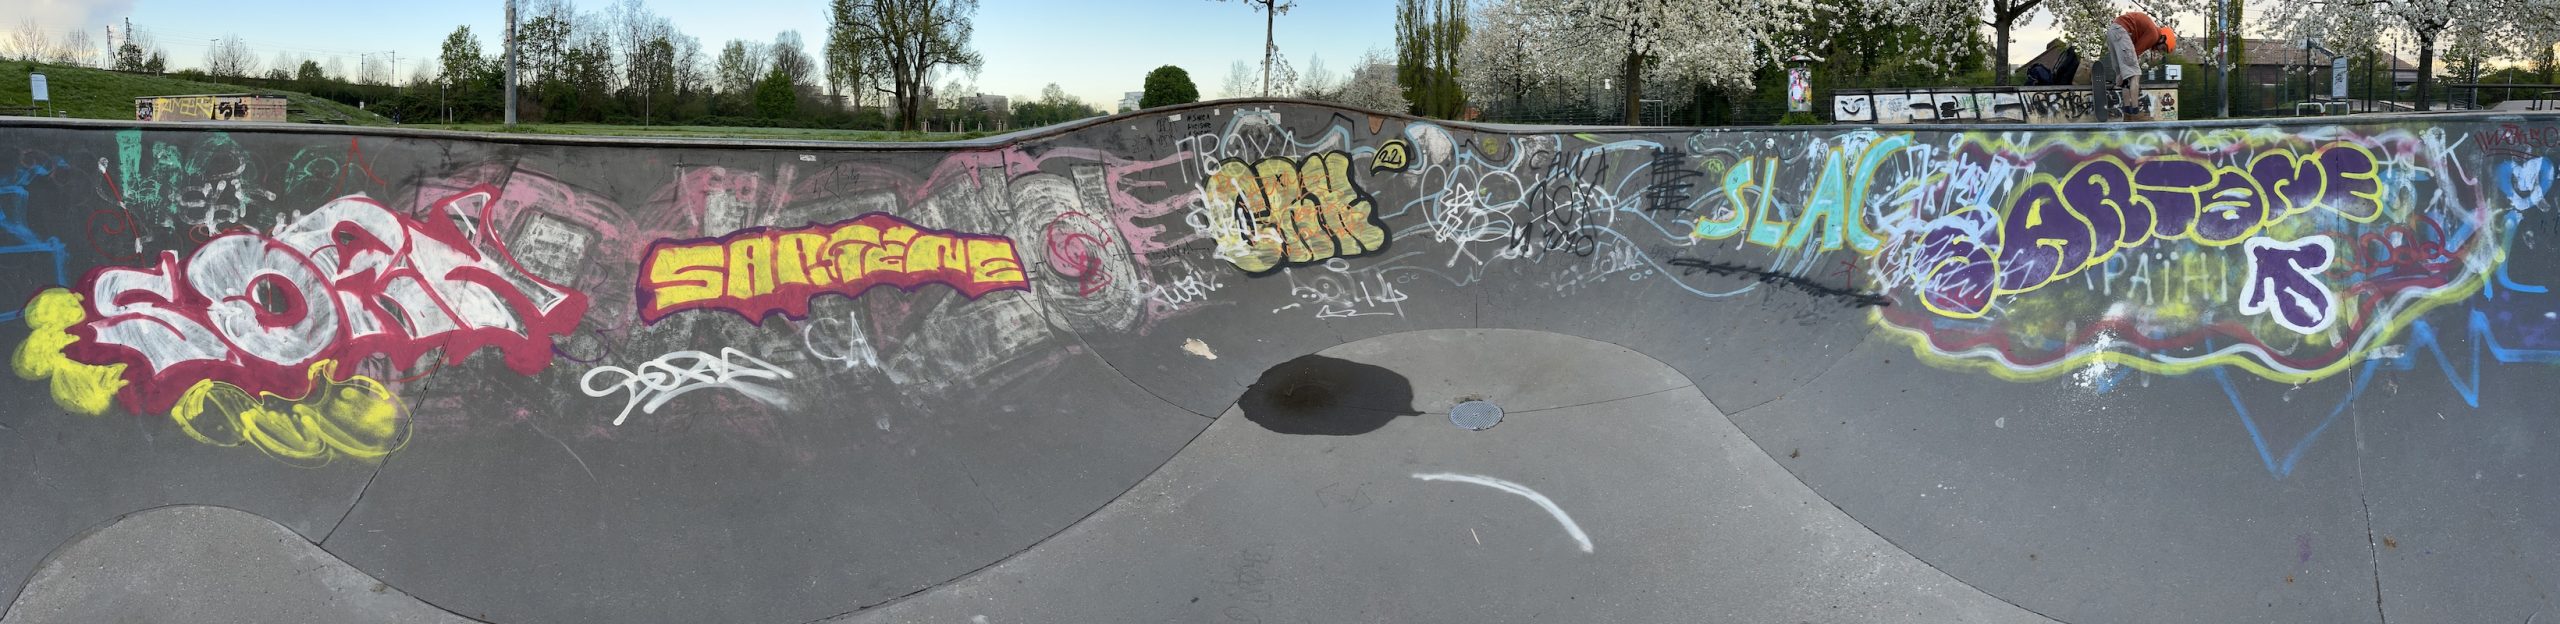 Skatepark Karlsruhe